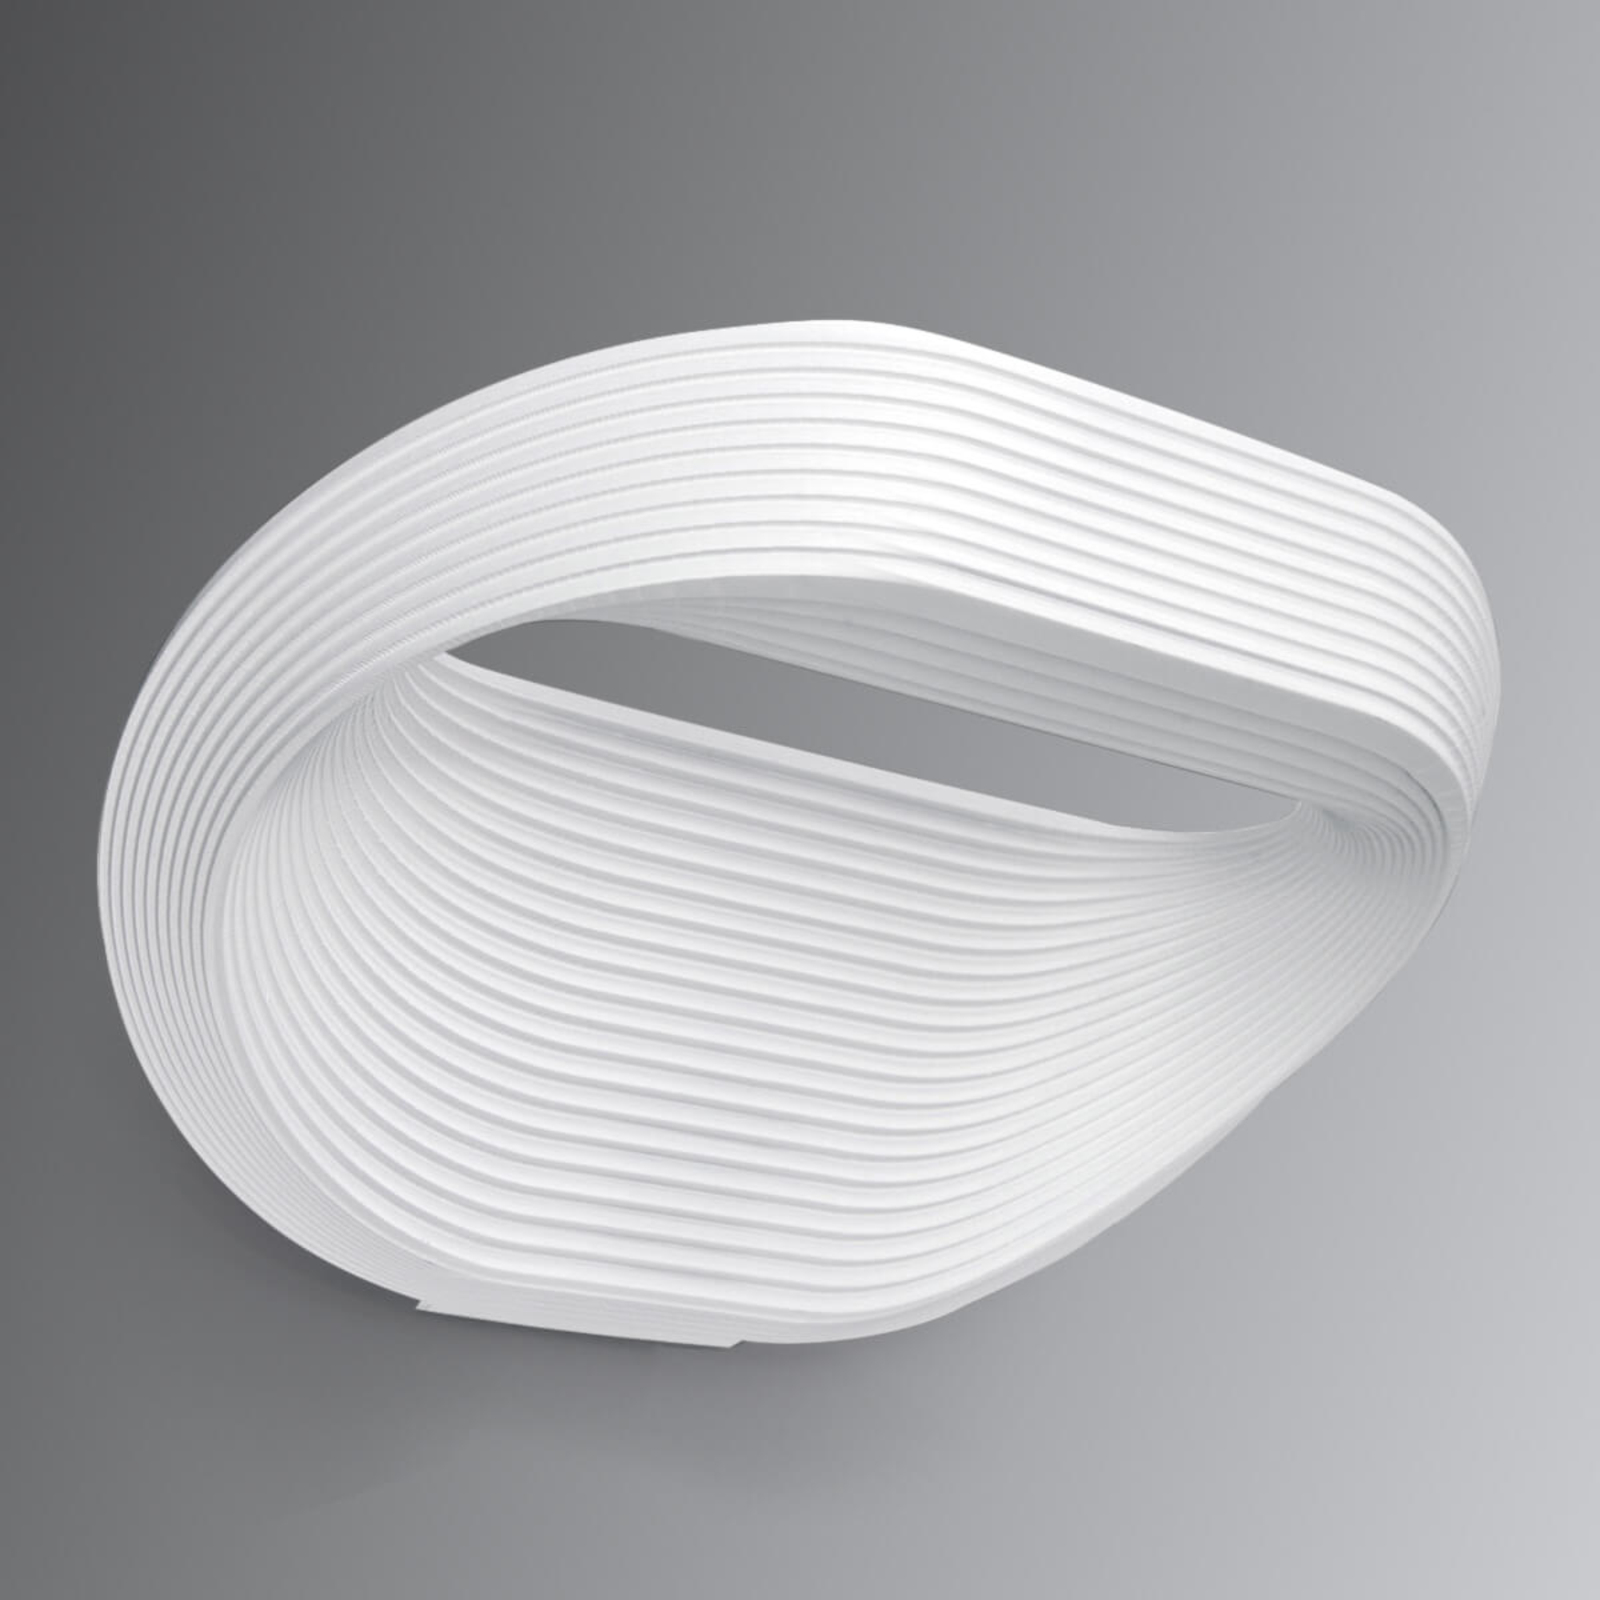 Cini&Nils Sestessa - white LED wall light, 33 cm